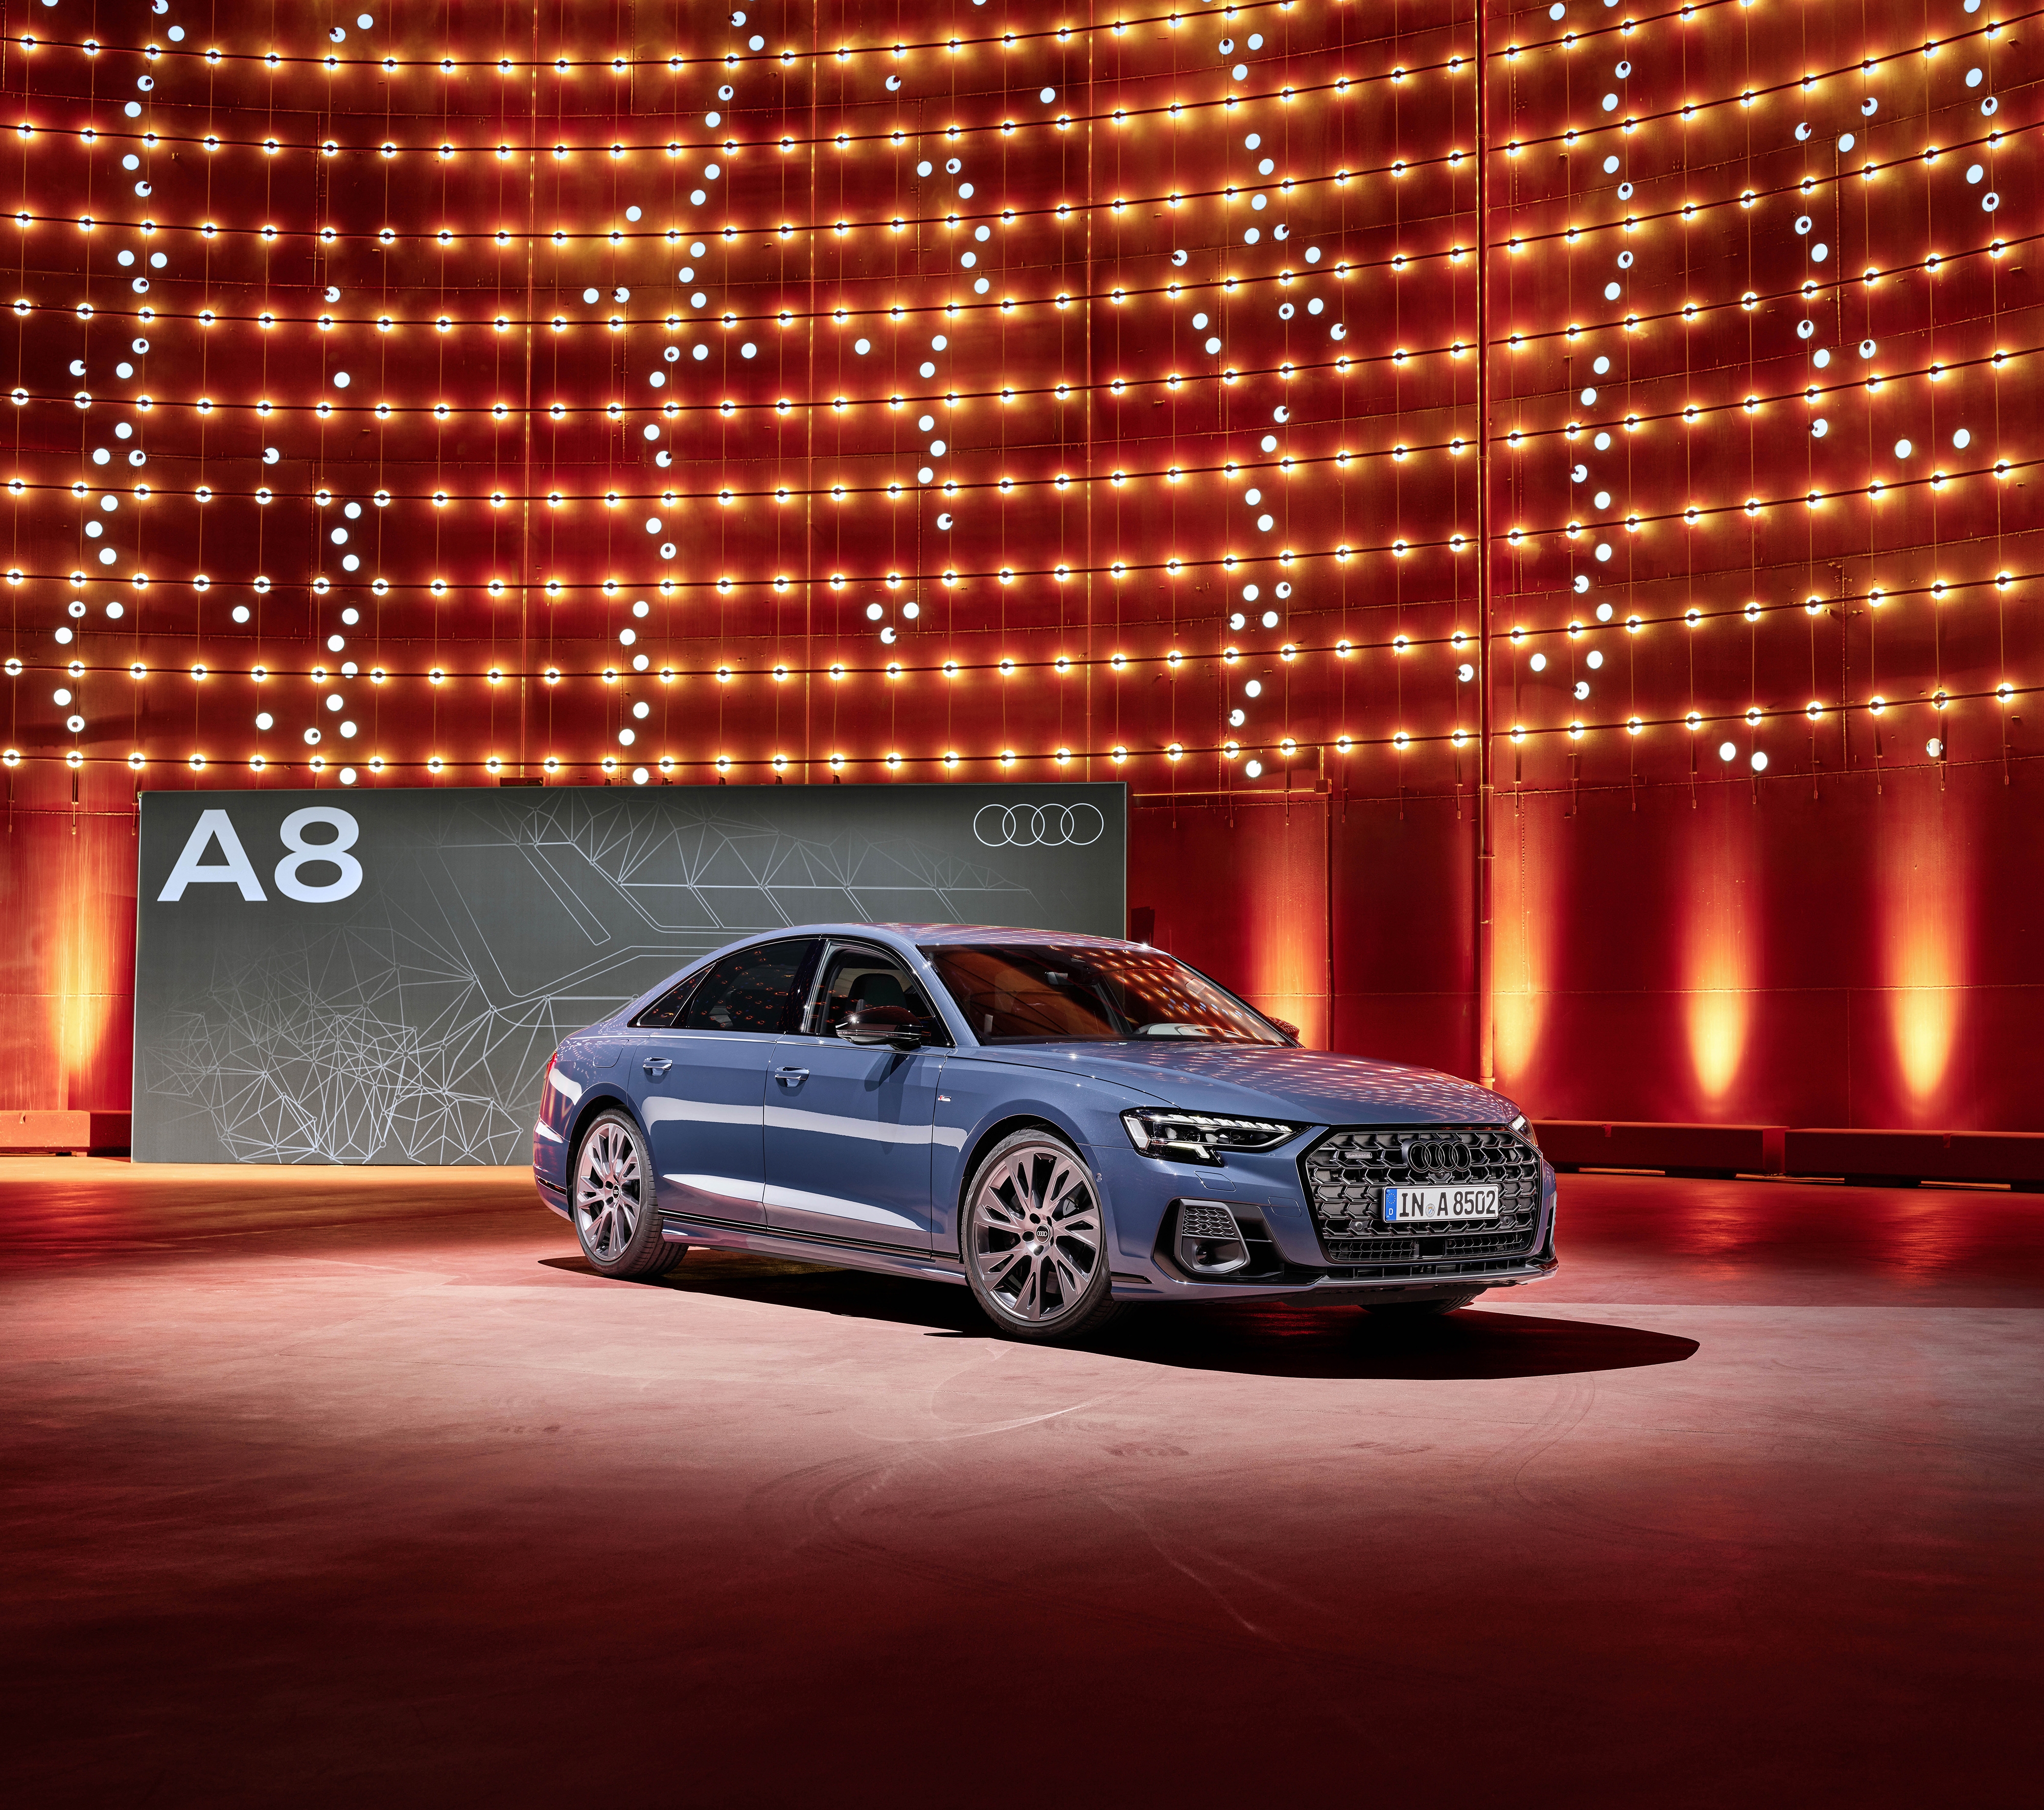 HD wallpaper, Audi A8 Quattro S Line, 2021